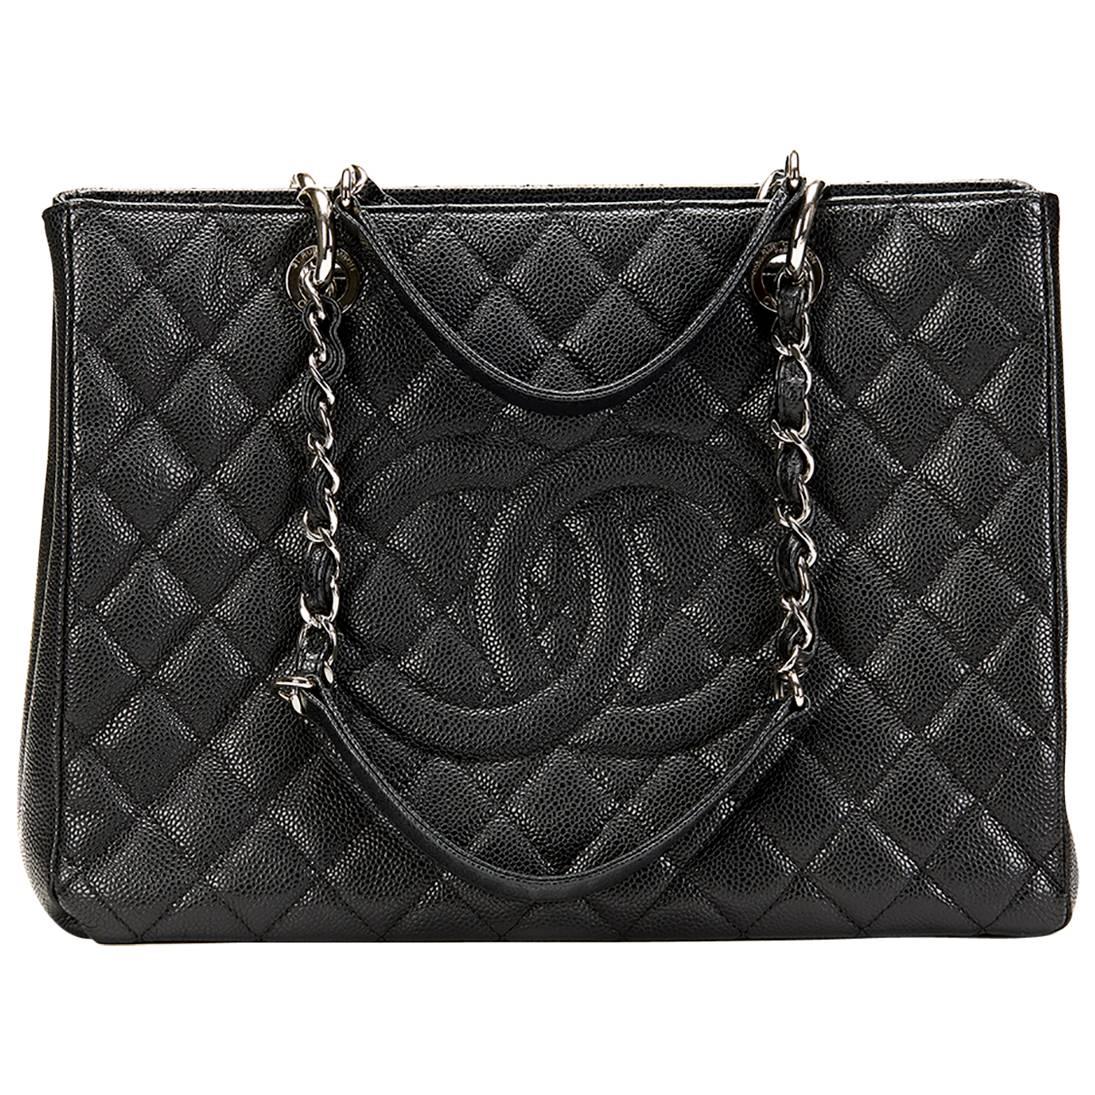 2012 Chanel Black Caviar Leather Grand Shopping Tote GST